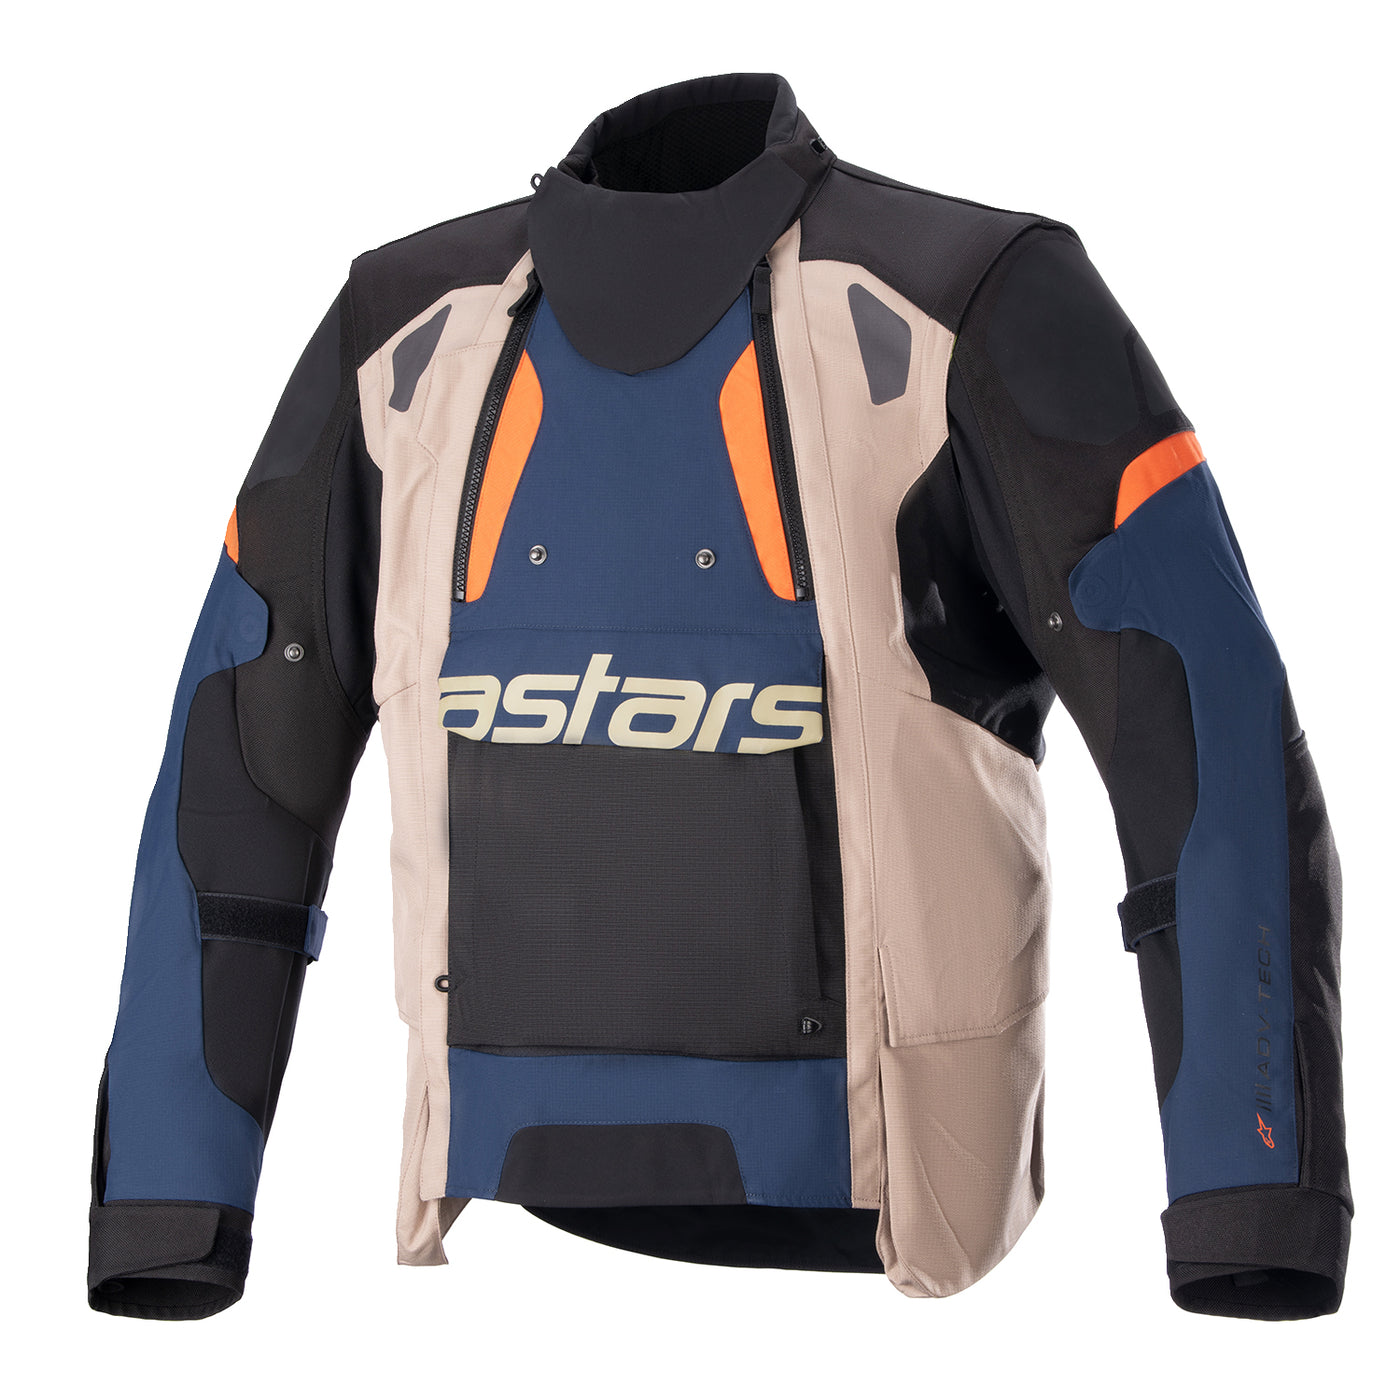 Alpinestars Halo Drystar® Jacket